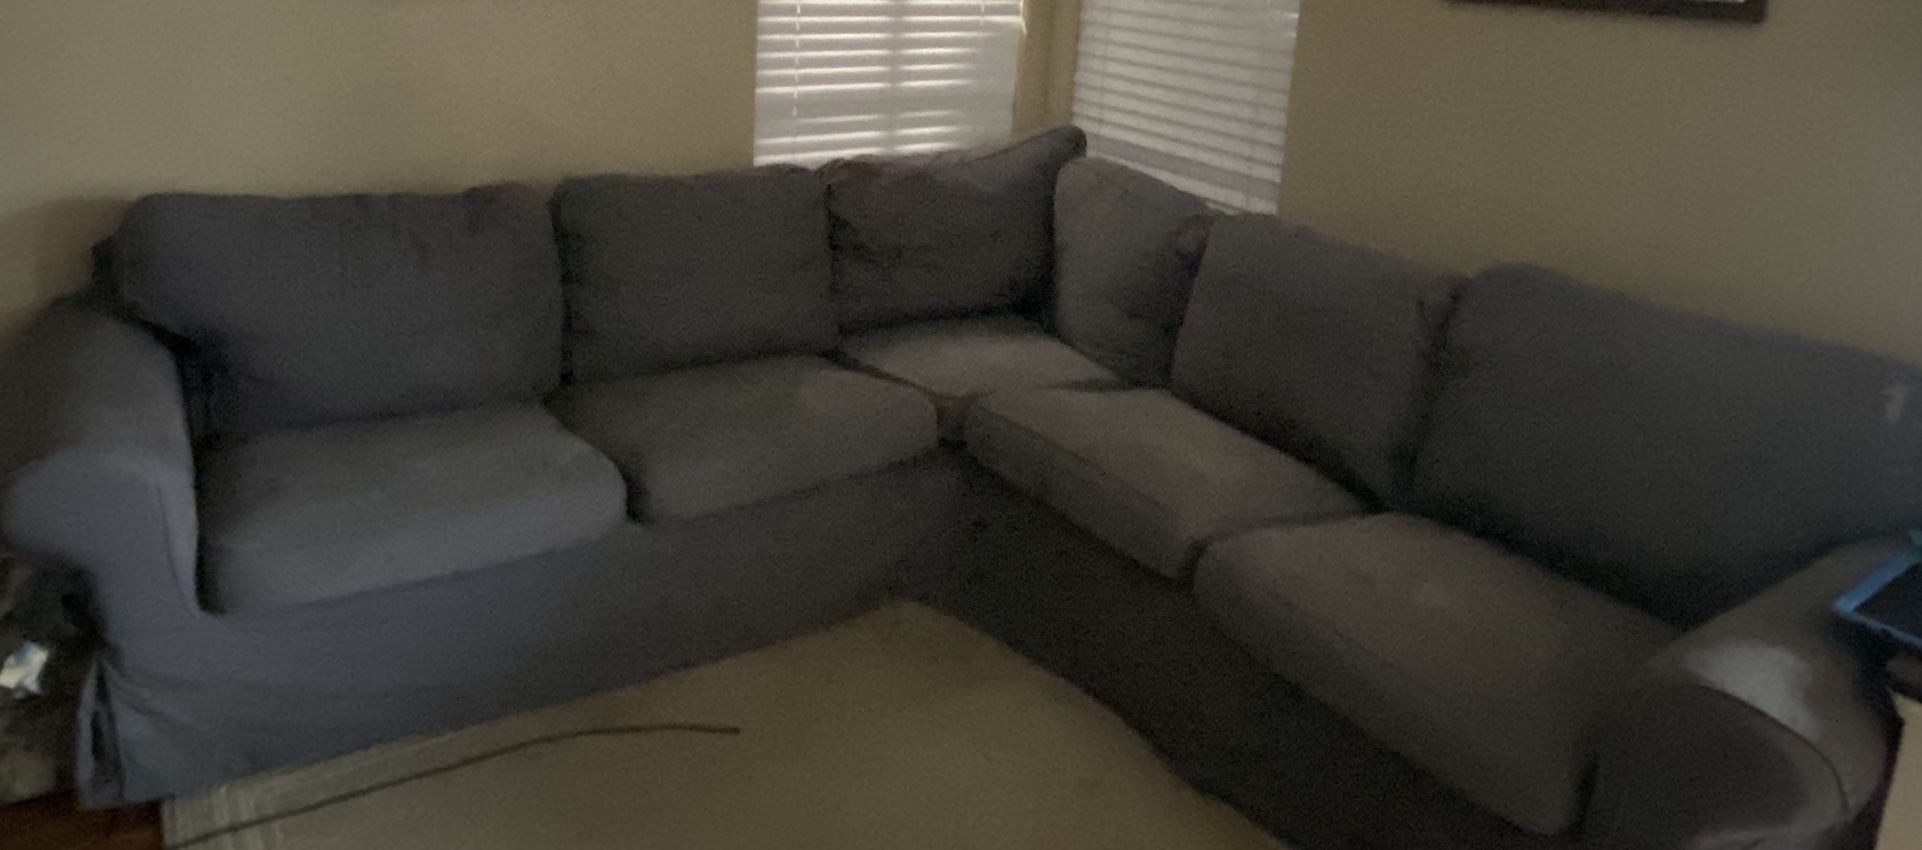 Ikea Ektorp Couch